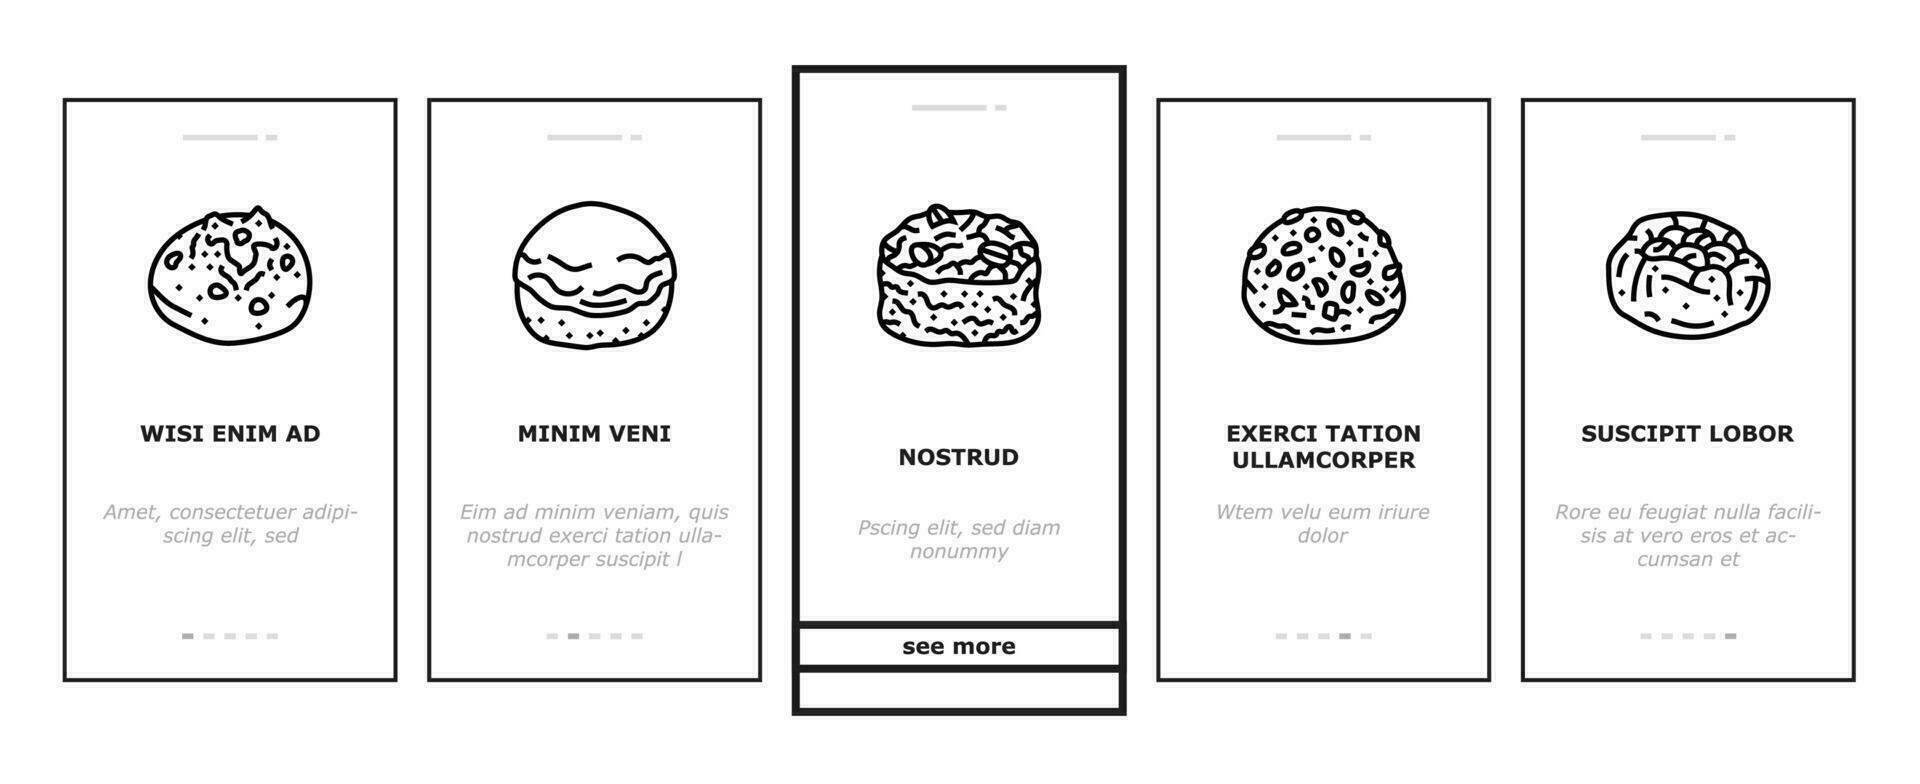 bun food meal bread onboarding icons set vector